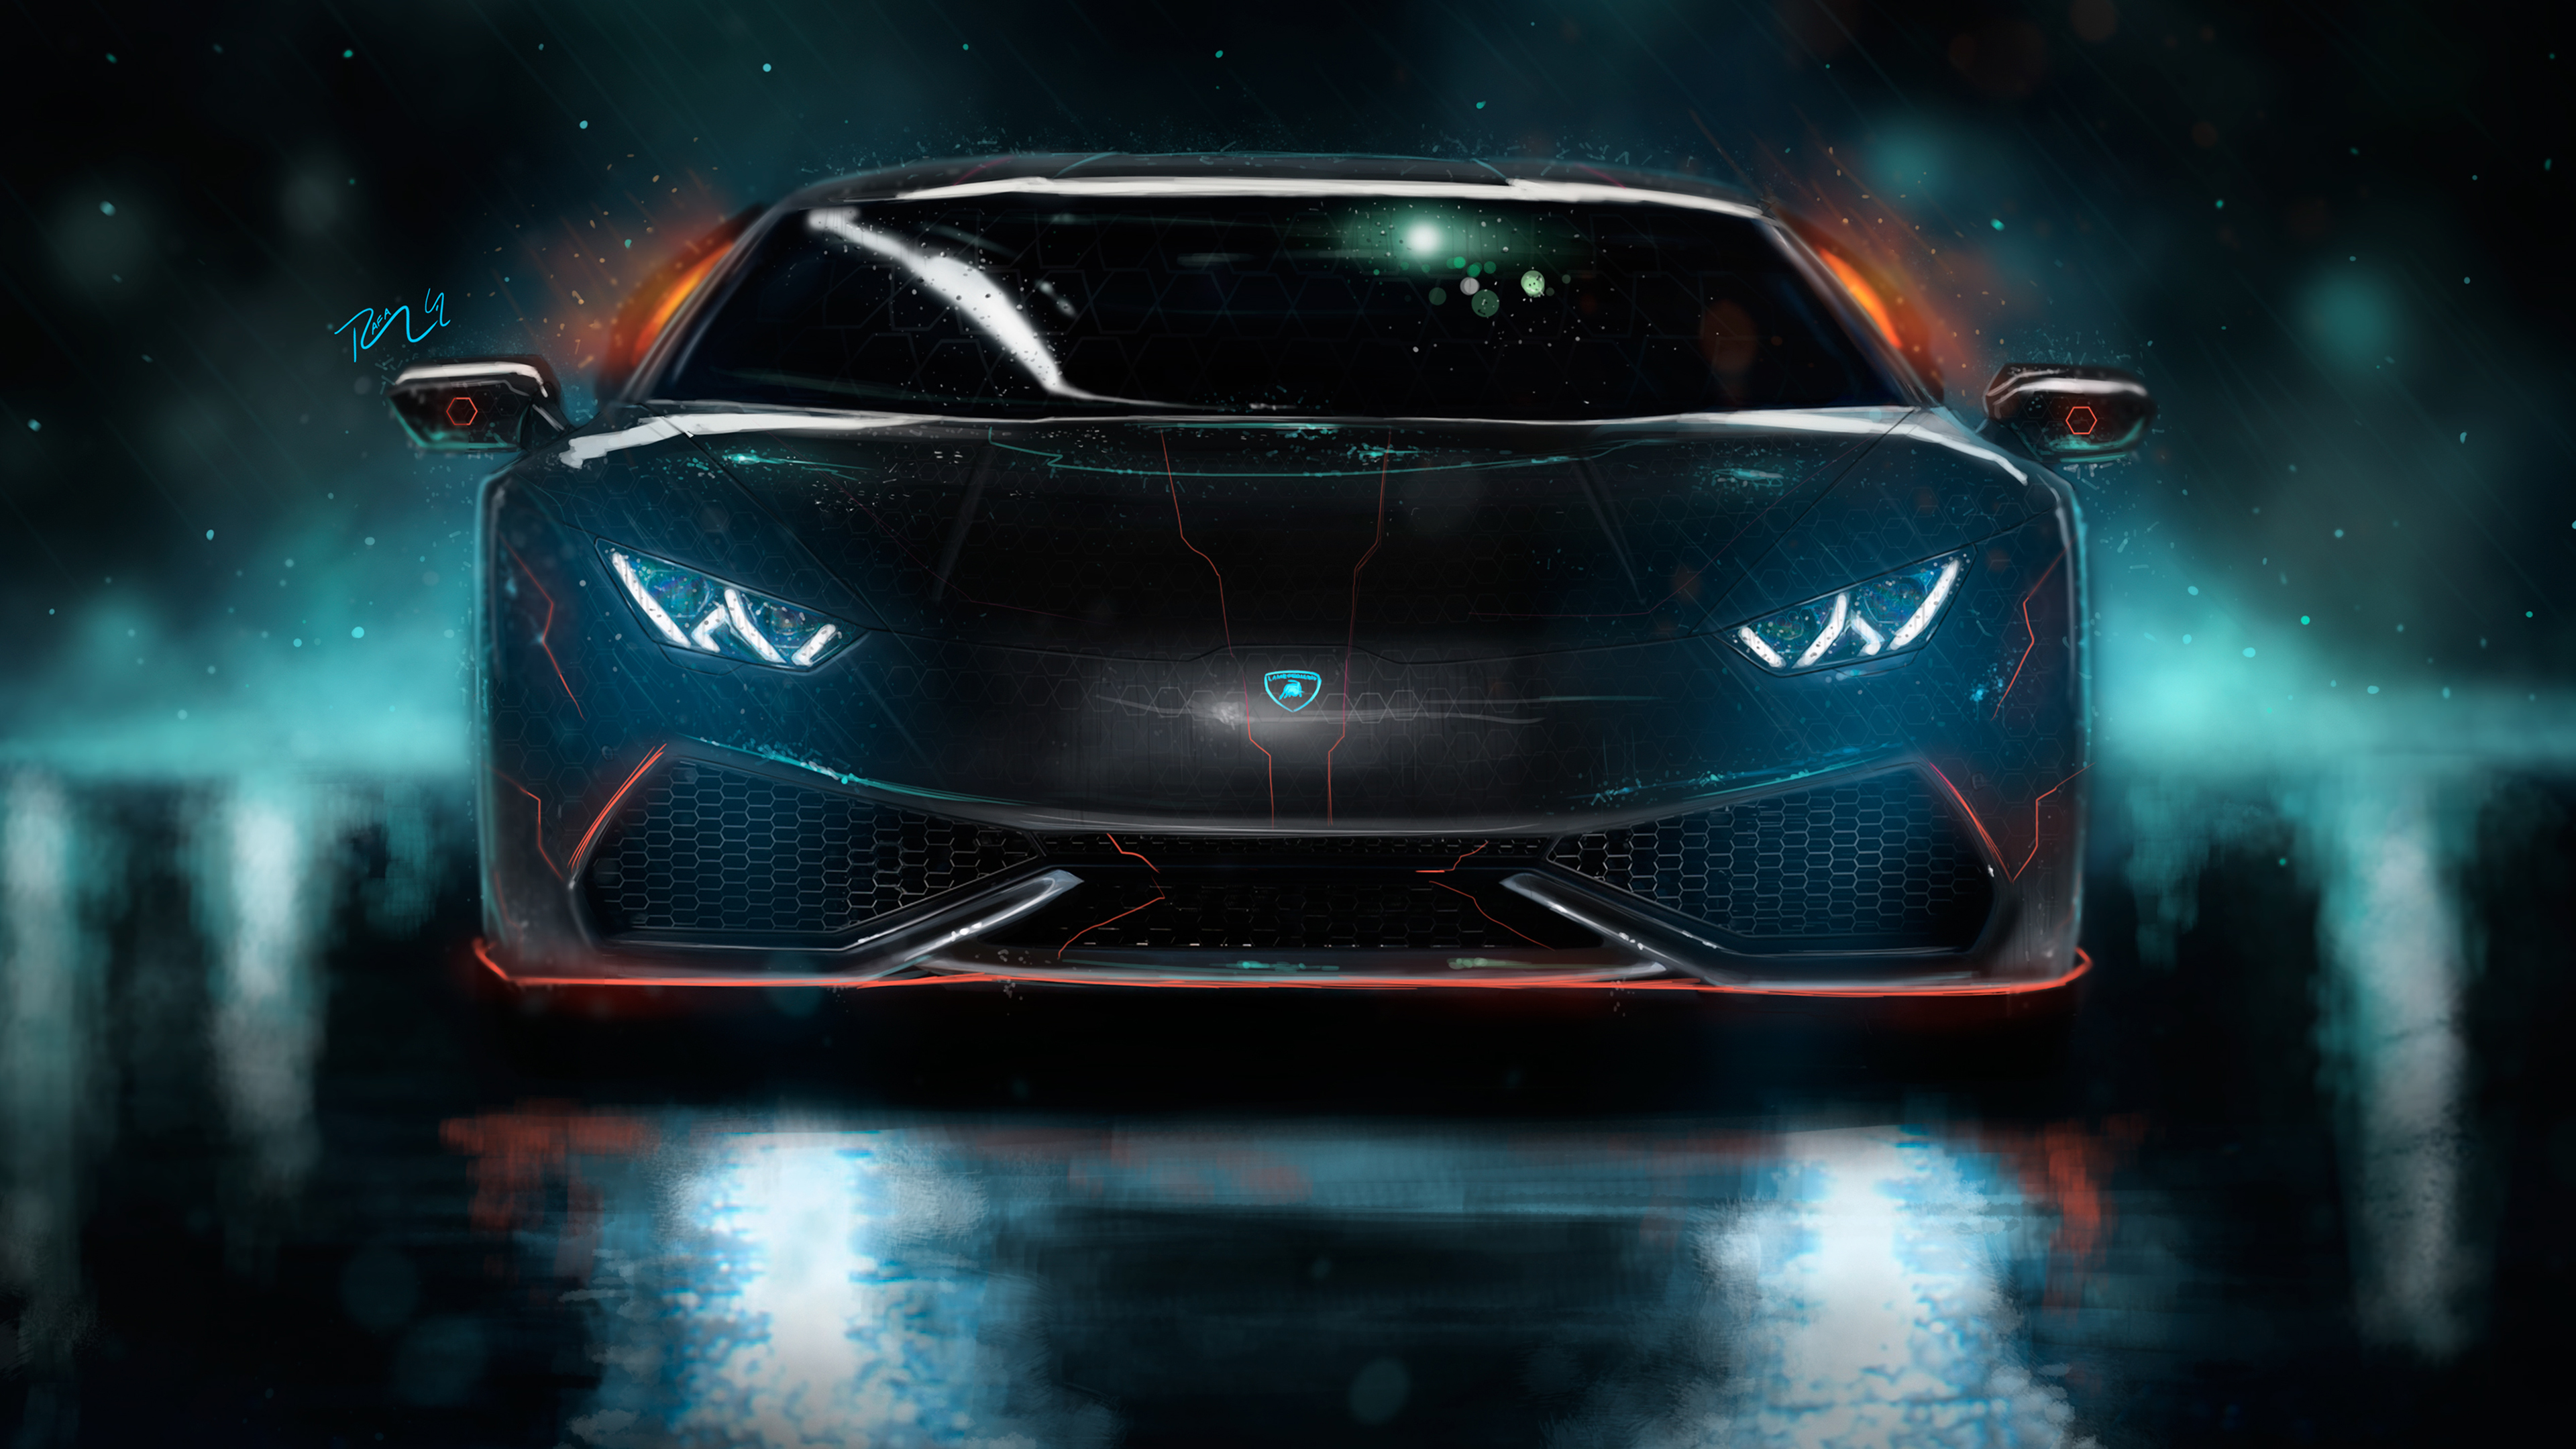 Lamborghini Huracan CGI 4K Wallpapers